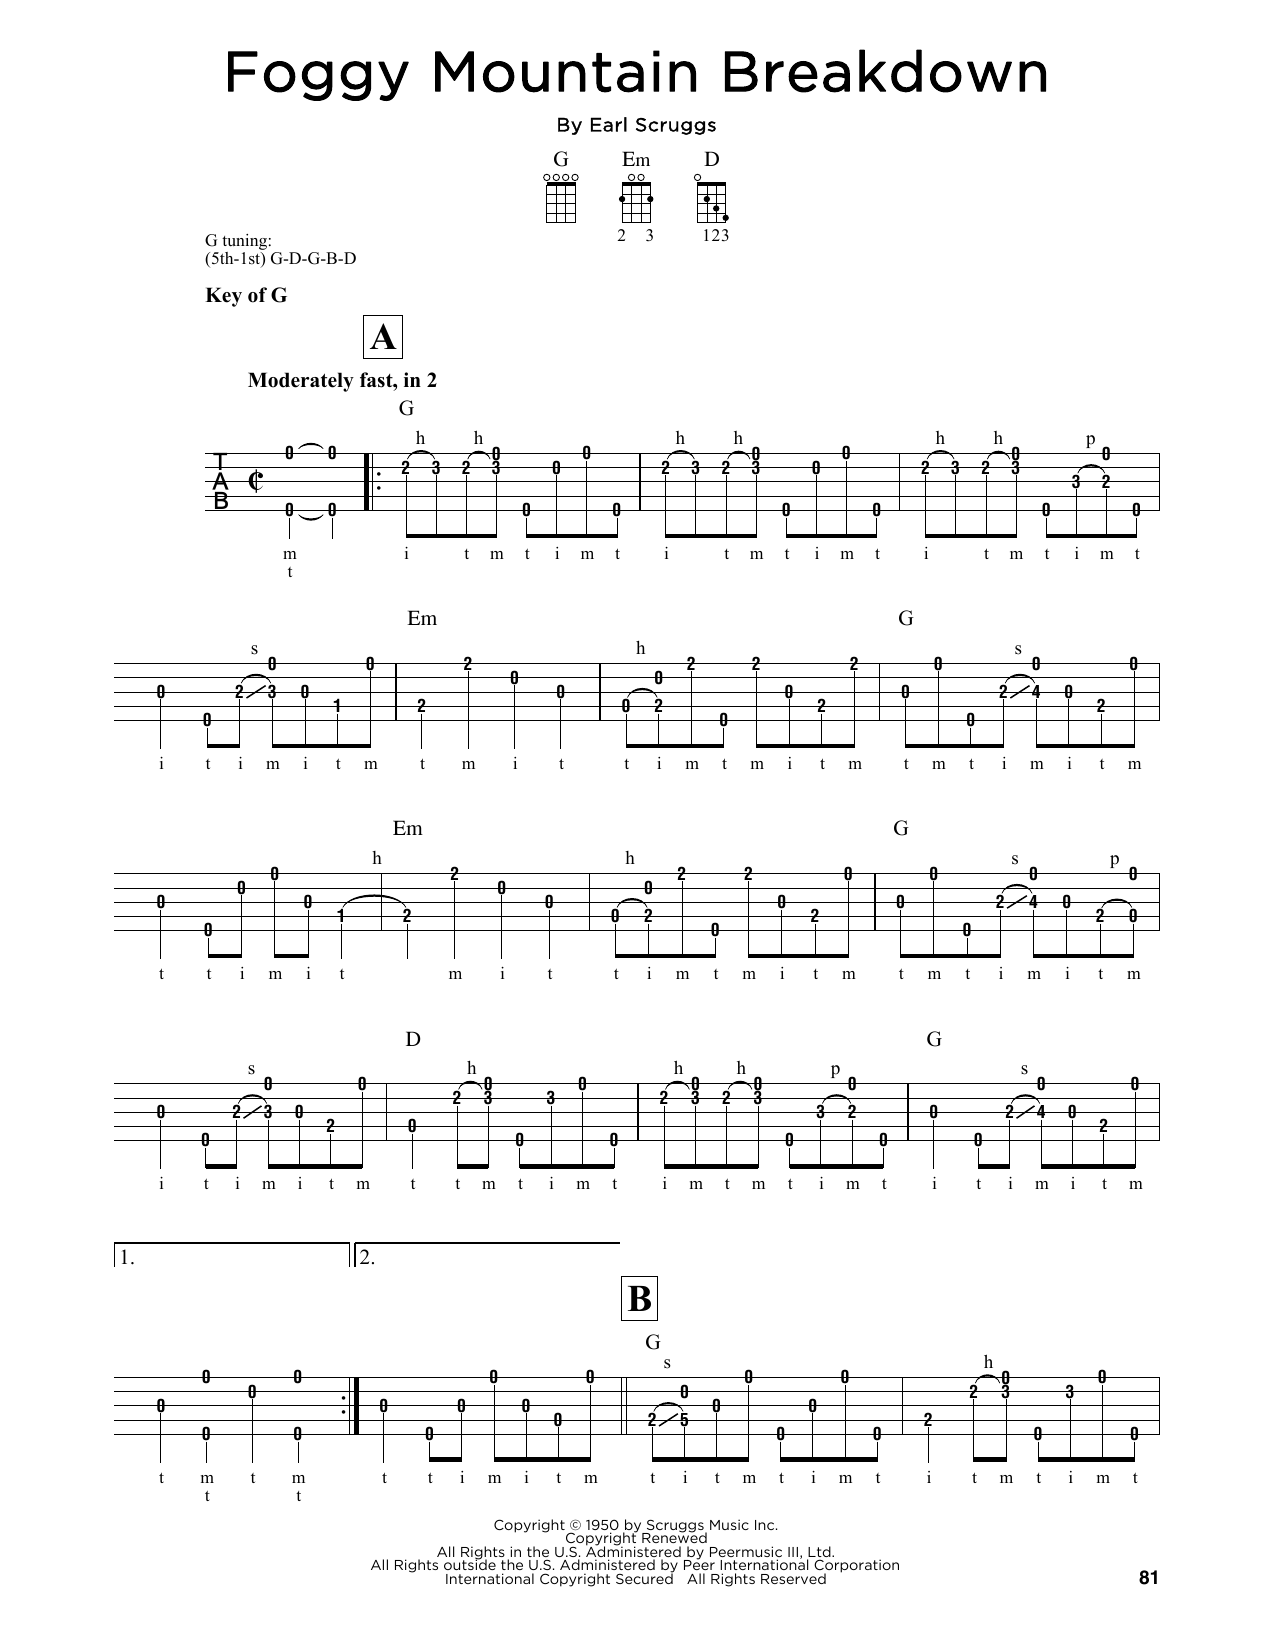 Lester Flatt & Earl Scruggs Foggy Mountain Breakdown Sheet Music Notes & Chords for Banjo - Download or Print PDF